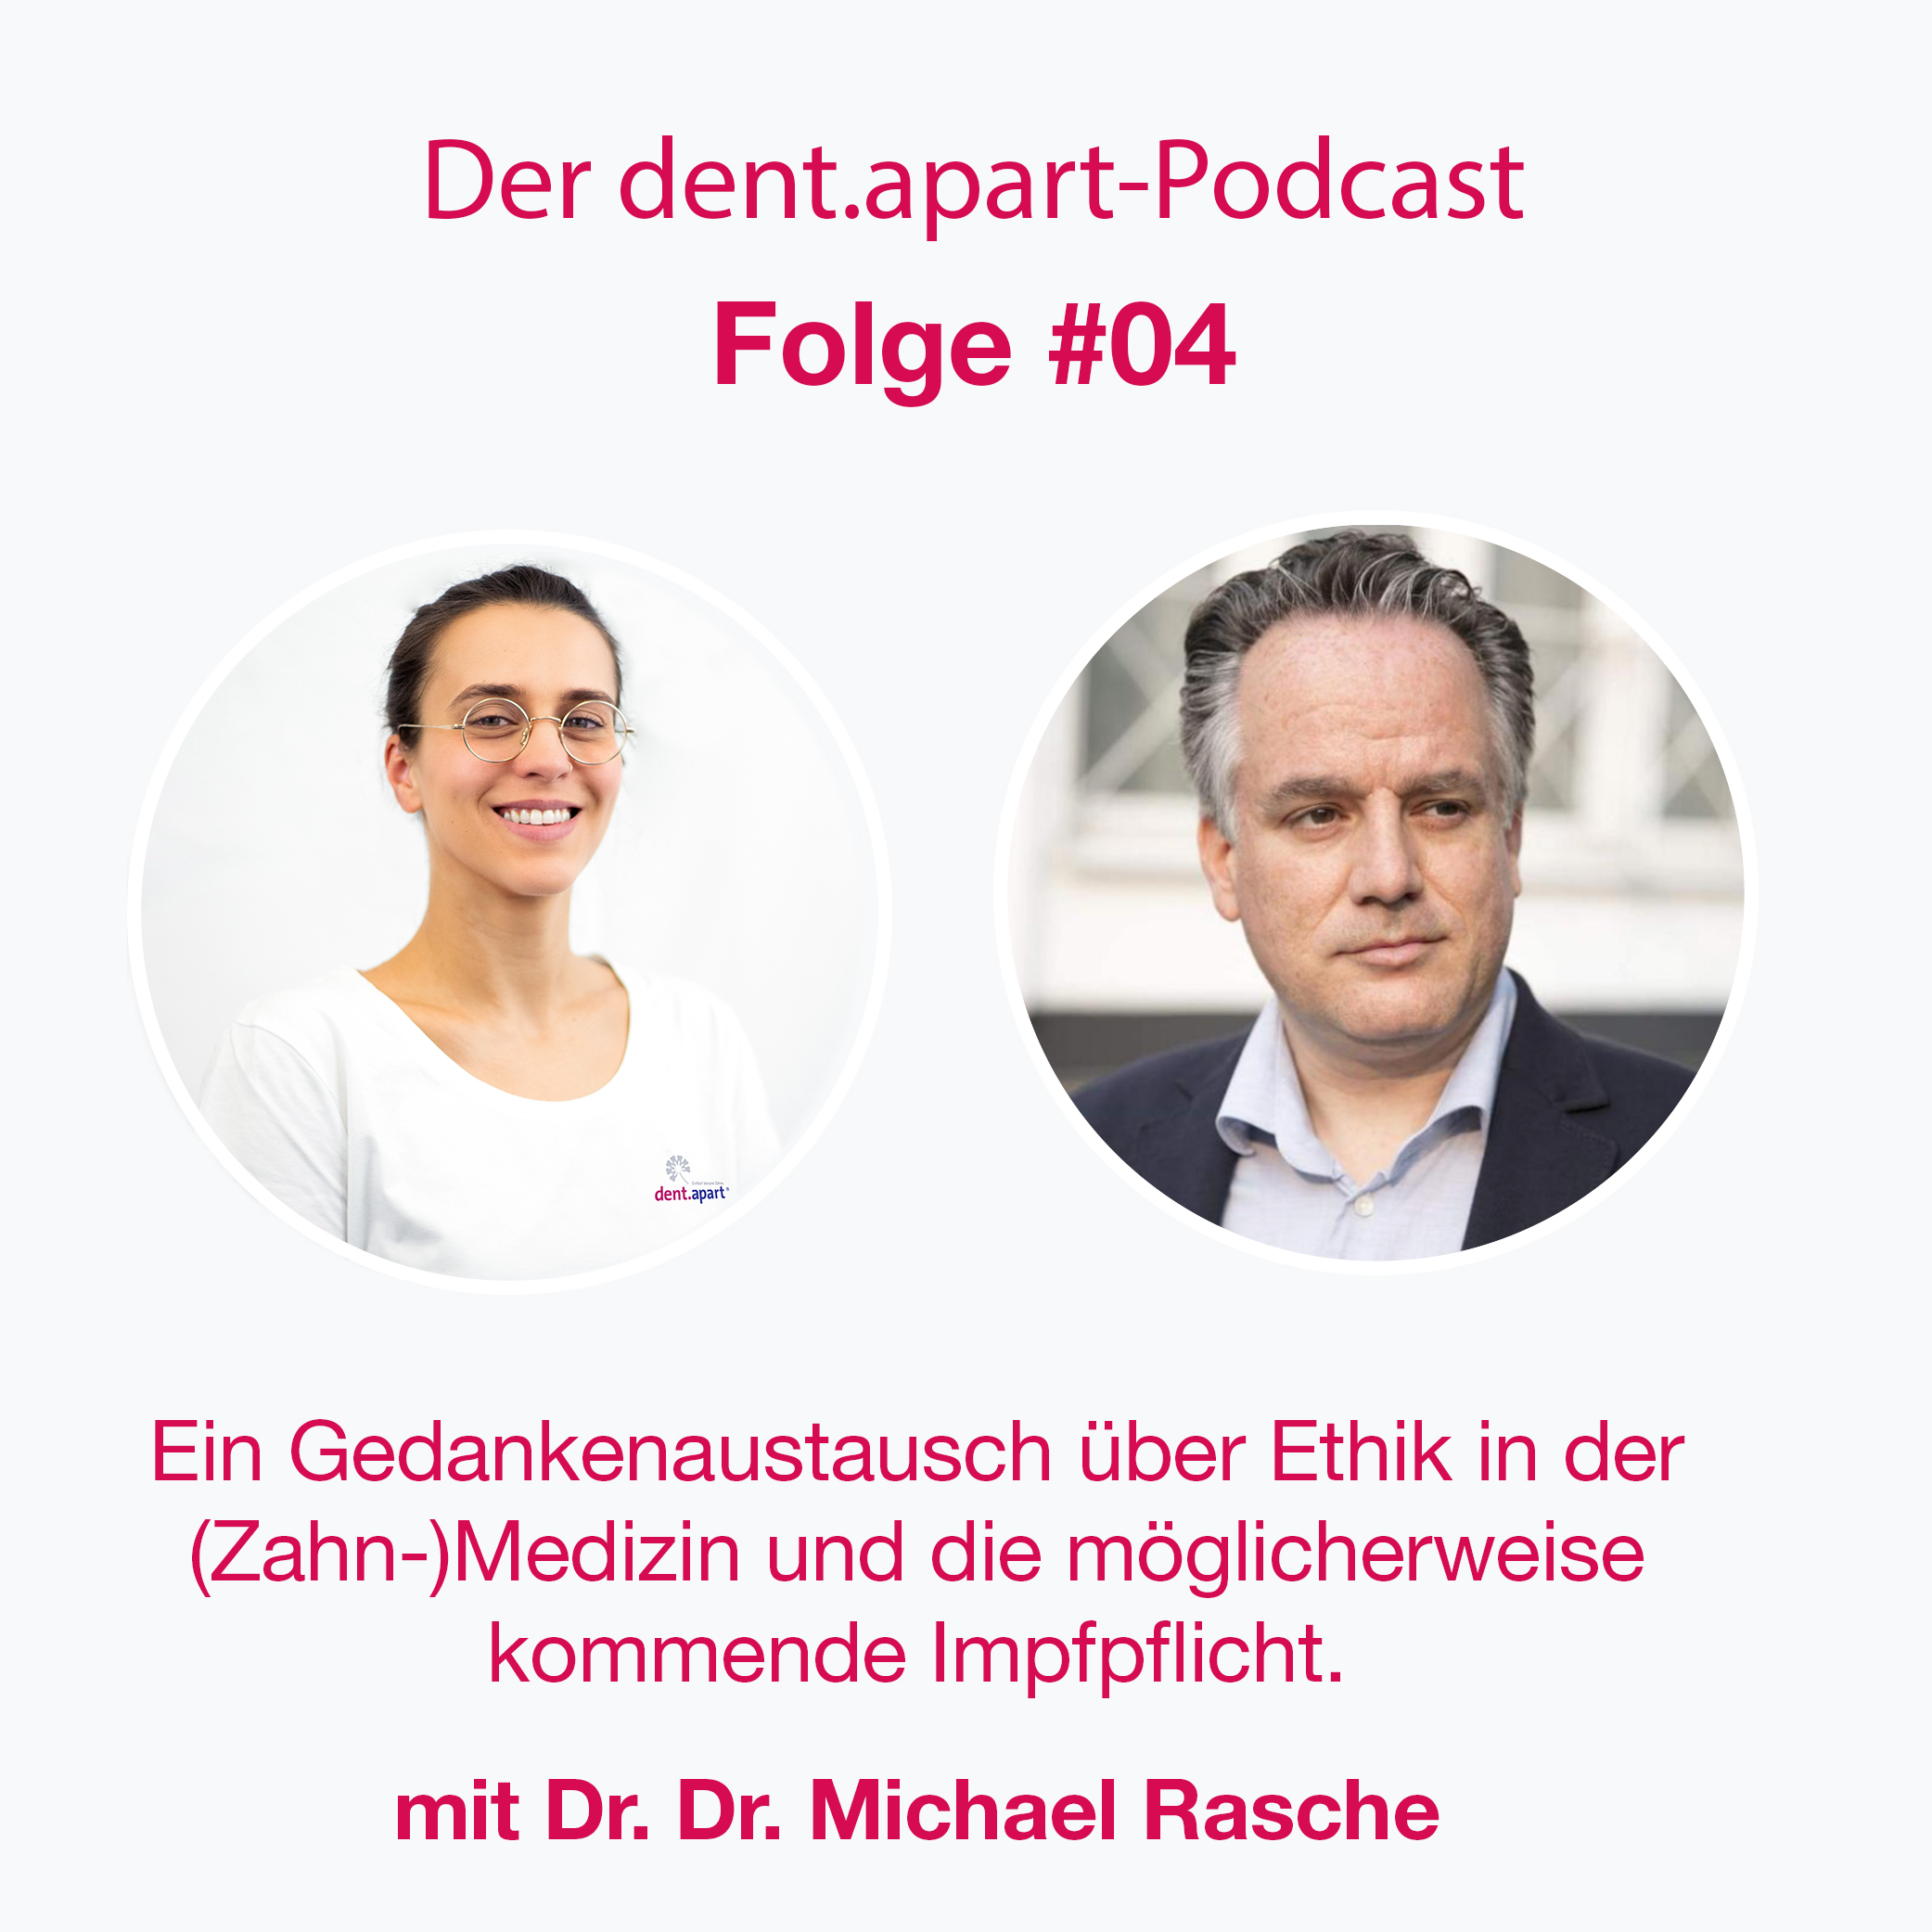 Der dent.apart-Podcast-Folge 04 mit Dr.Dr. Michael Rasche